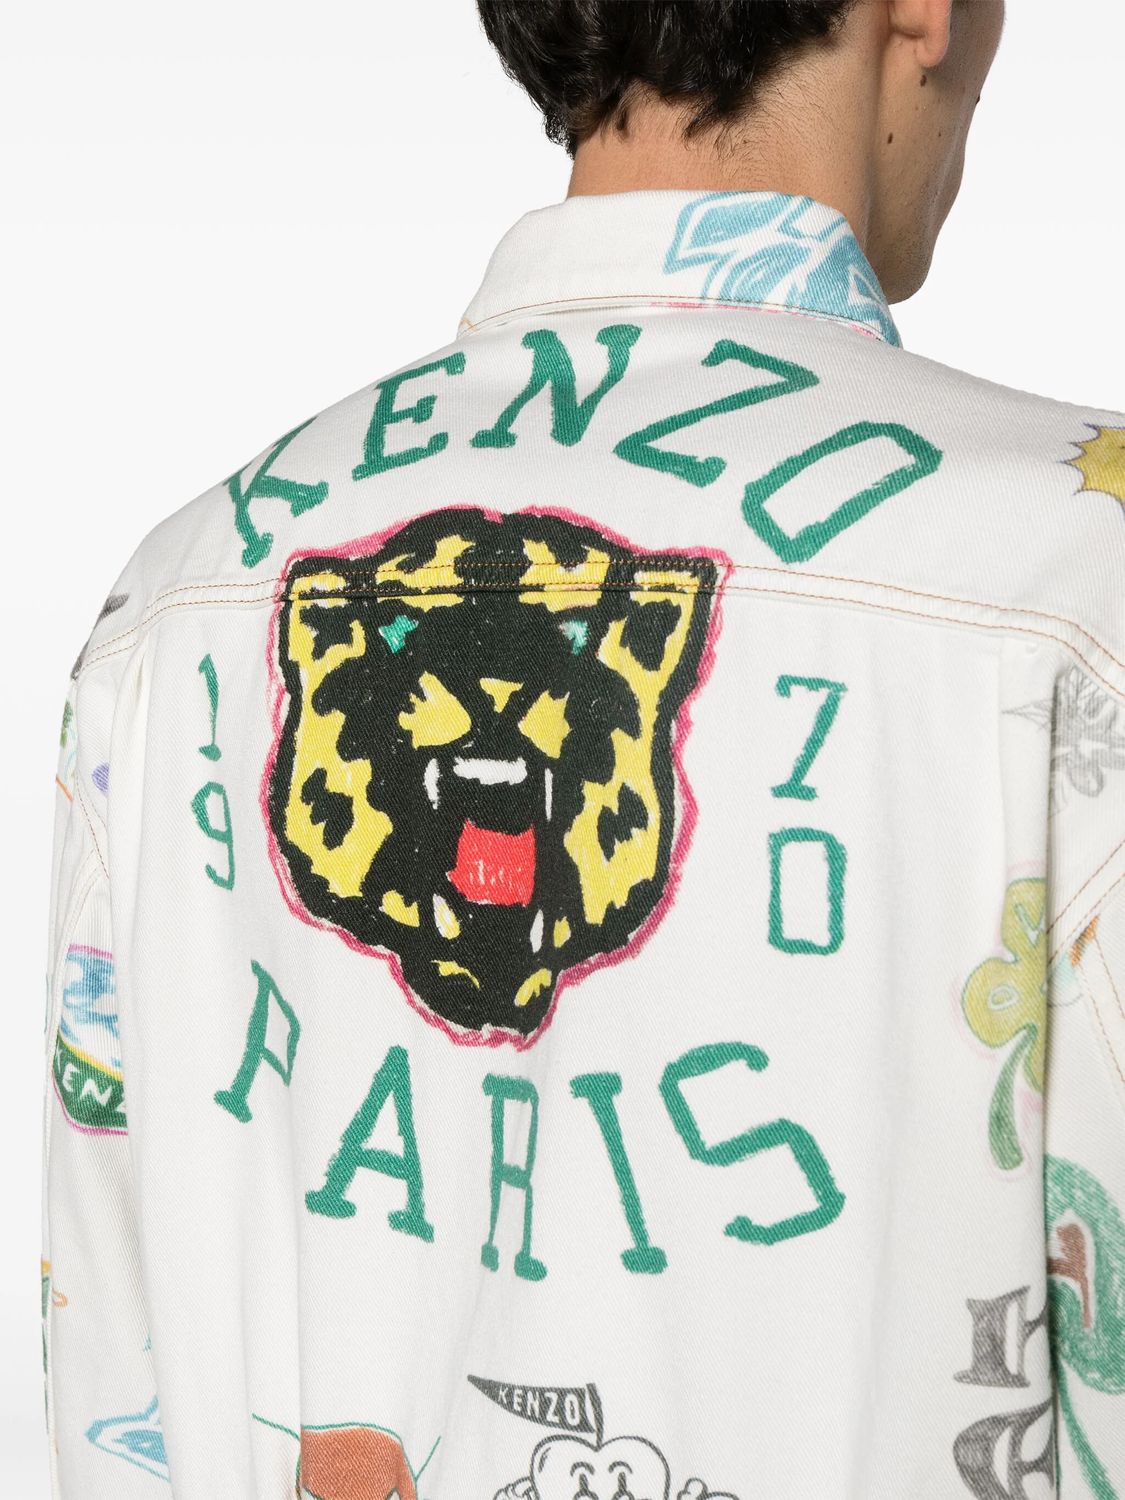 KENZO Men's Varsity Denim Jacket - White/Multicolor, Signature Tiger Print, All-Over Graphic, Fallen Shoulders